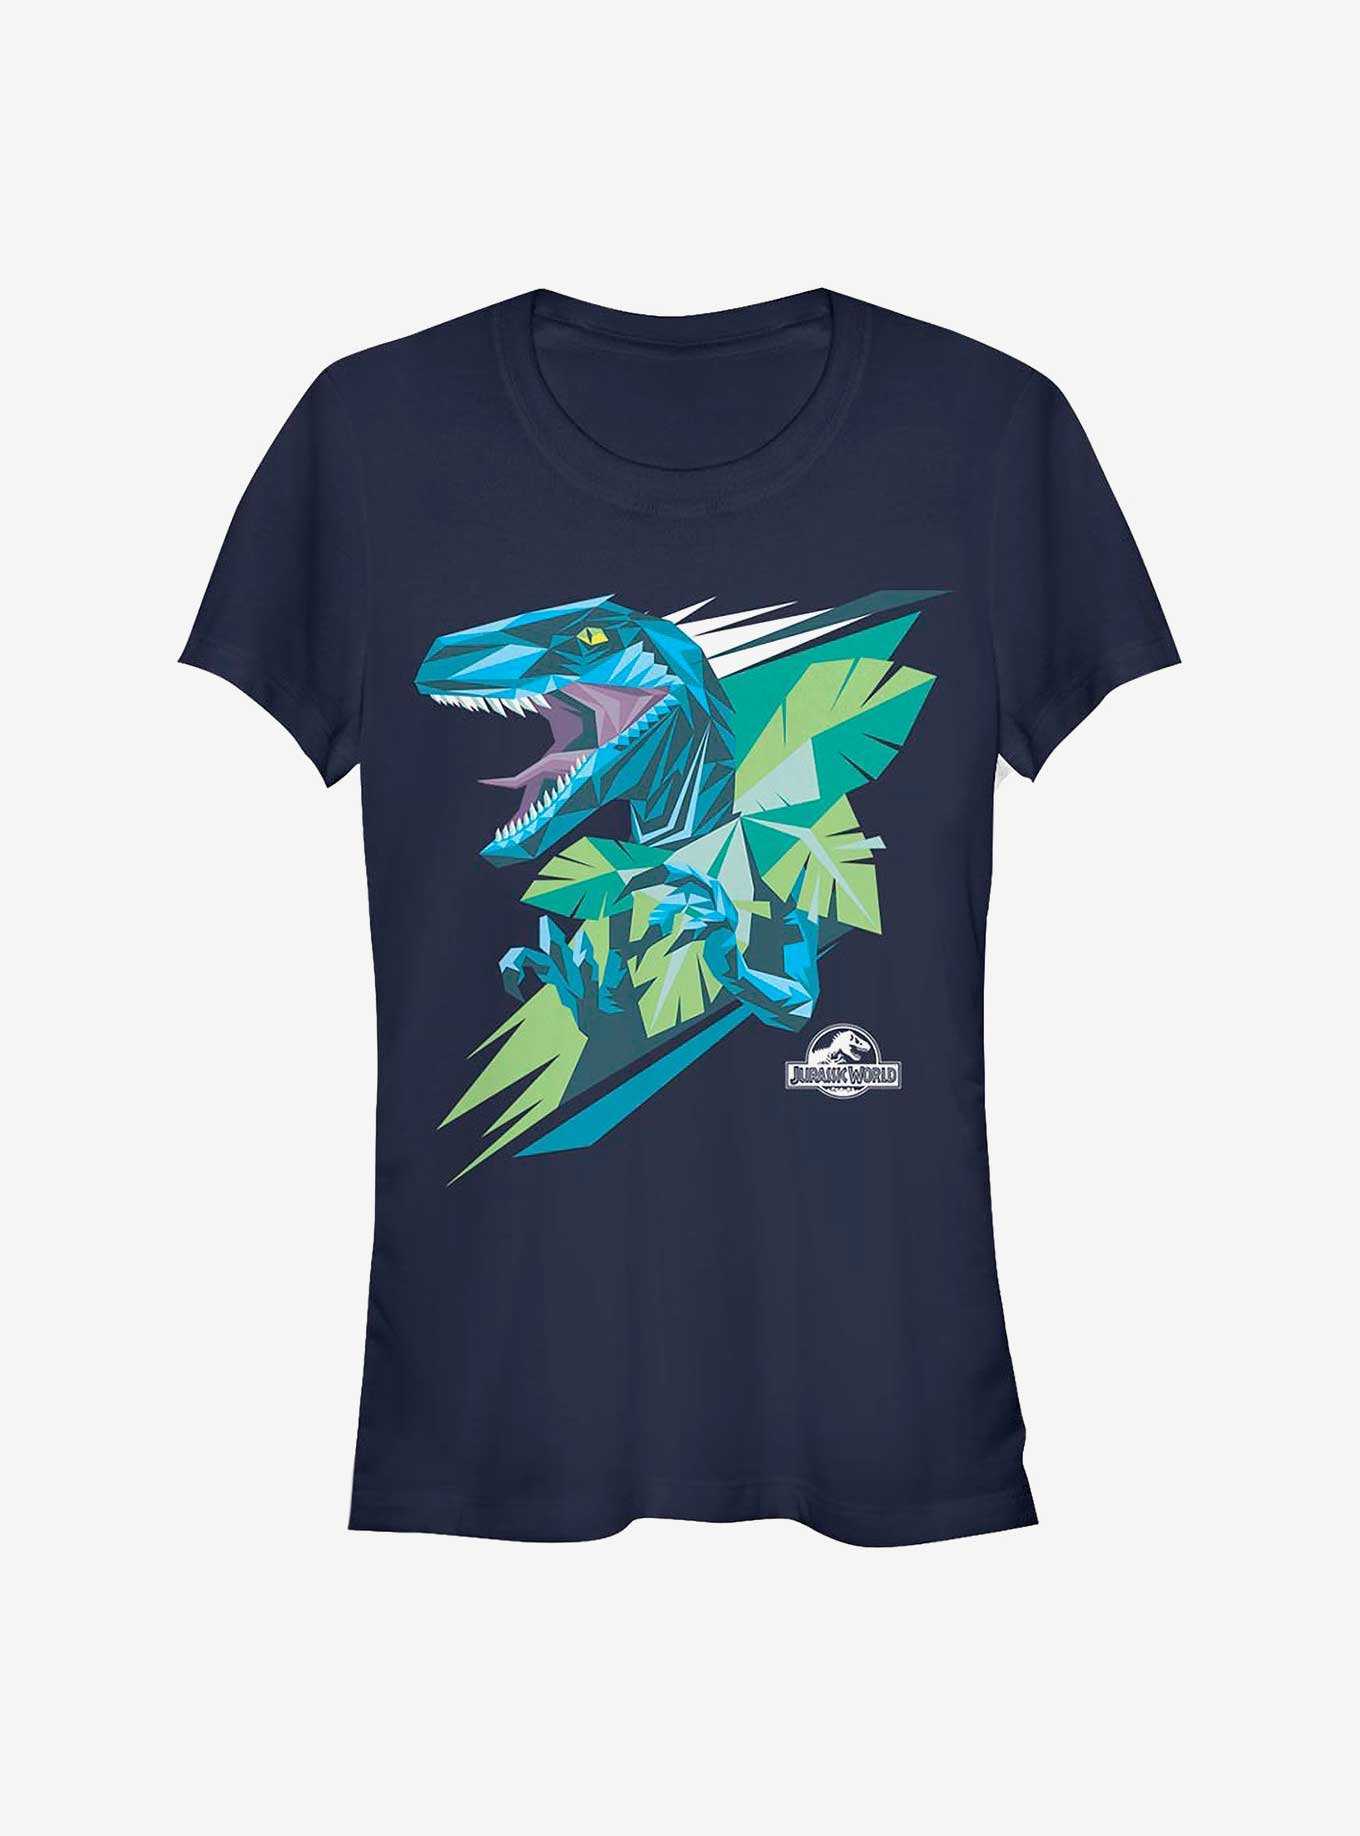 Jurassic Park Blue Dino Girls T-Shirt, , hi-res